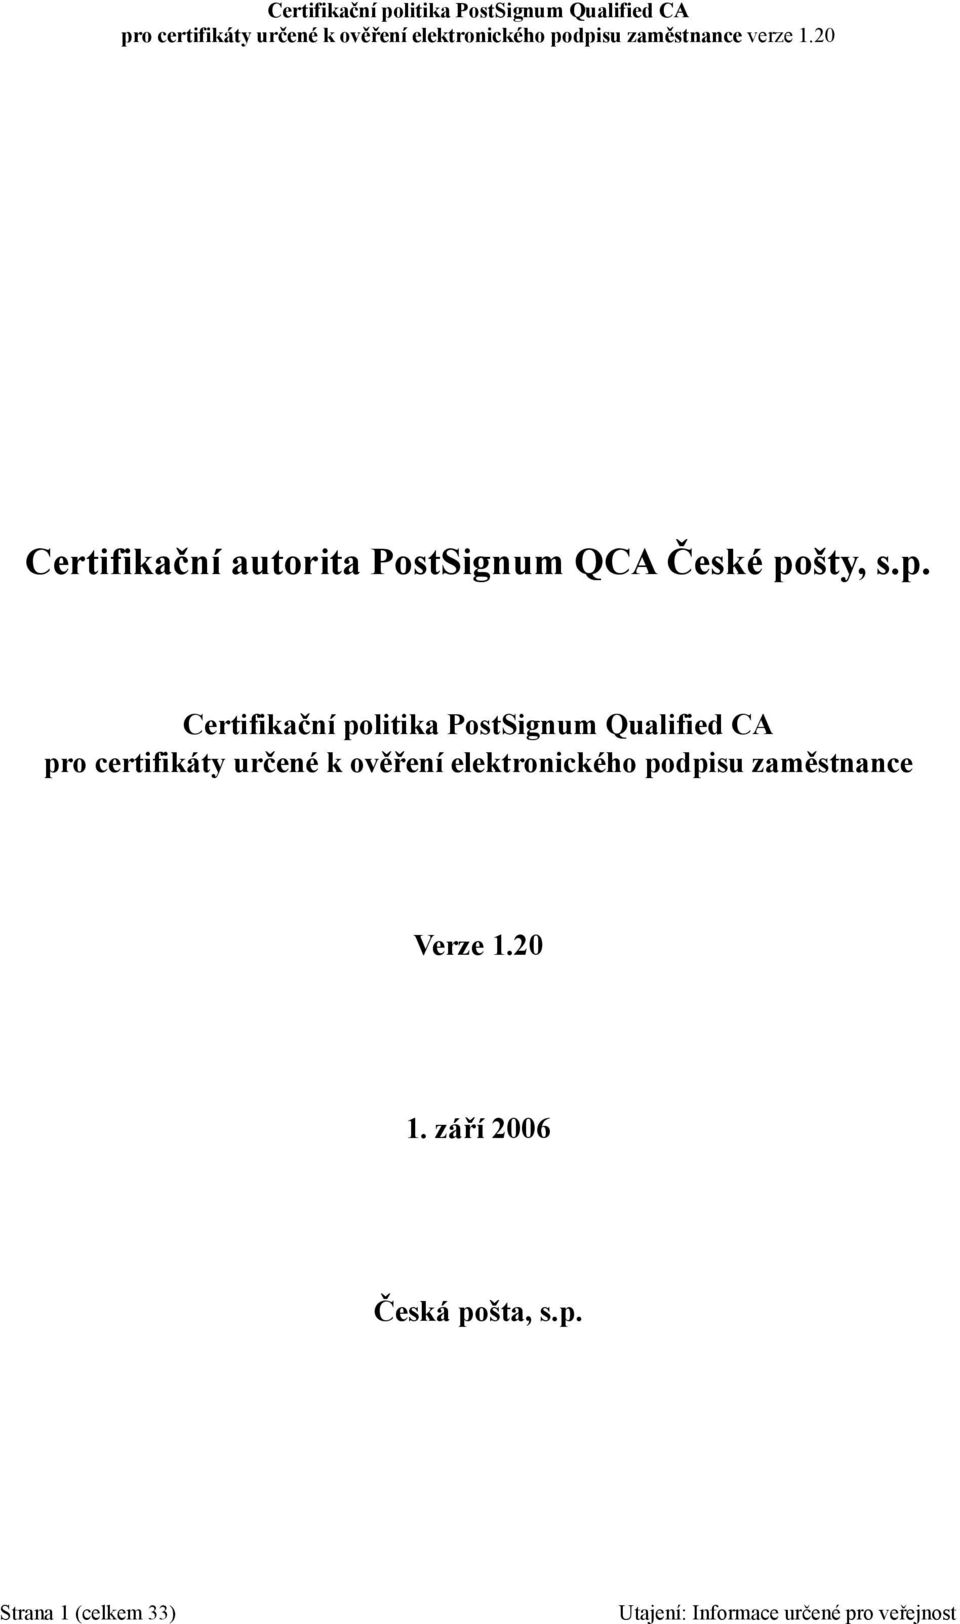 Certifikační politika PostSignum Qualified CA pro